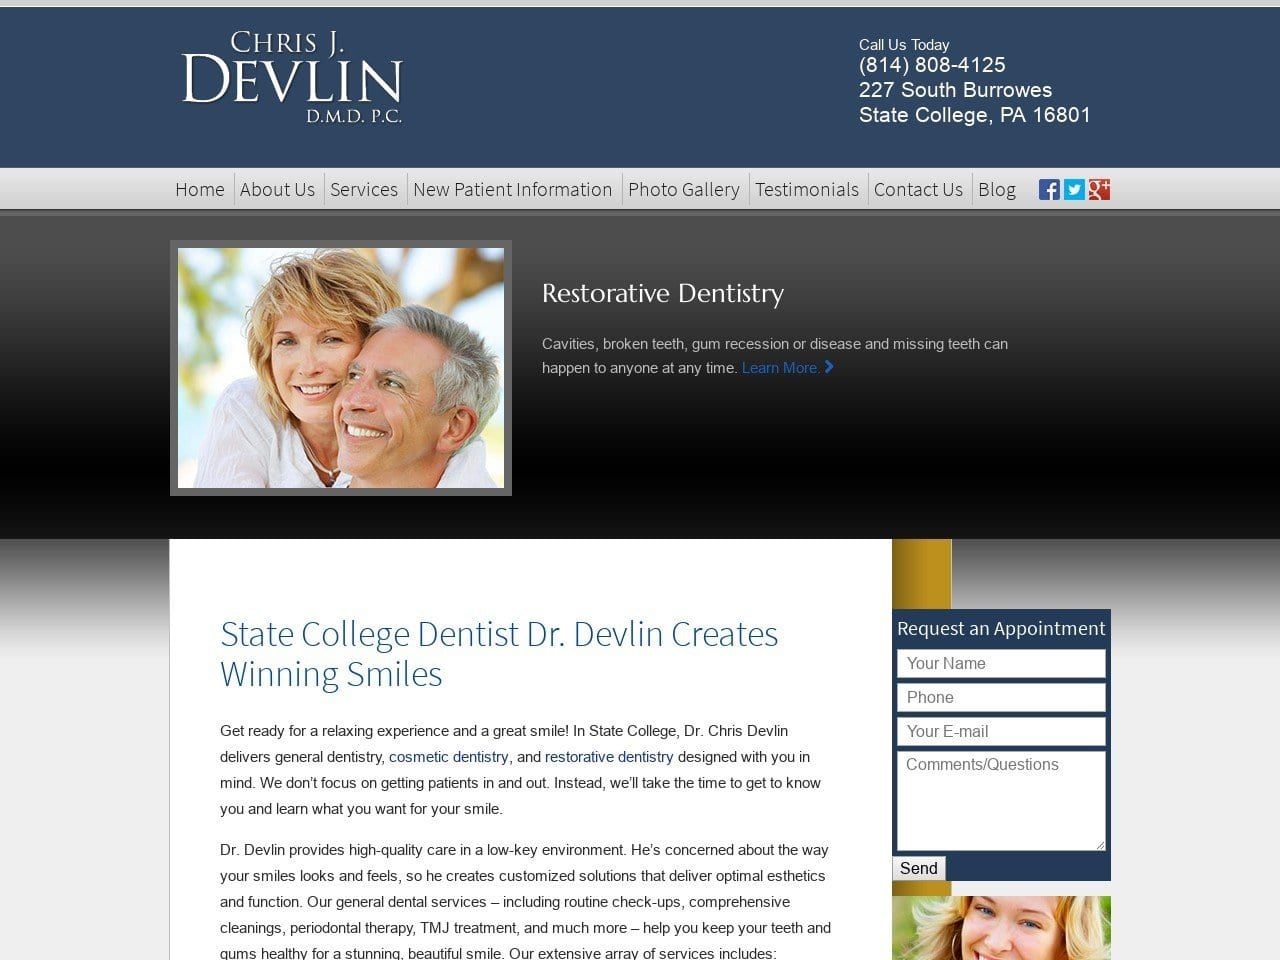 Chris J Devlin DMD PC Website Screenshot from devlindental.com